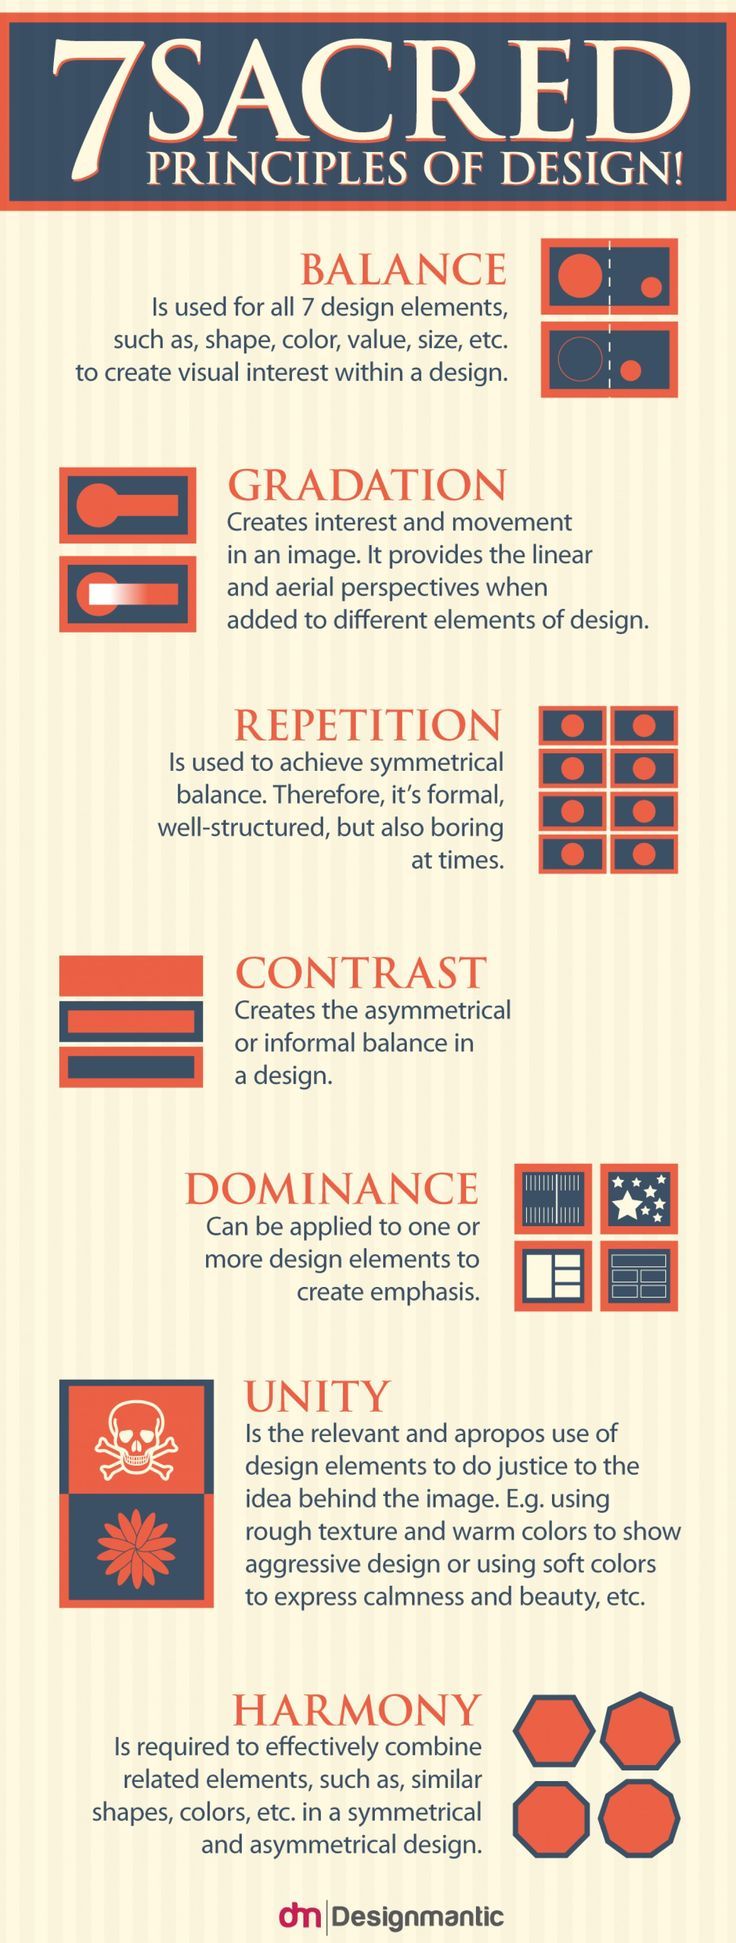 7 Sacred Principles Of Design!